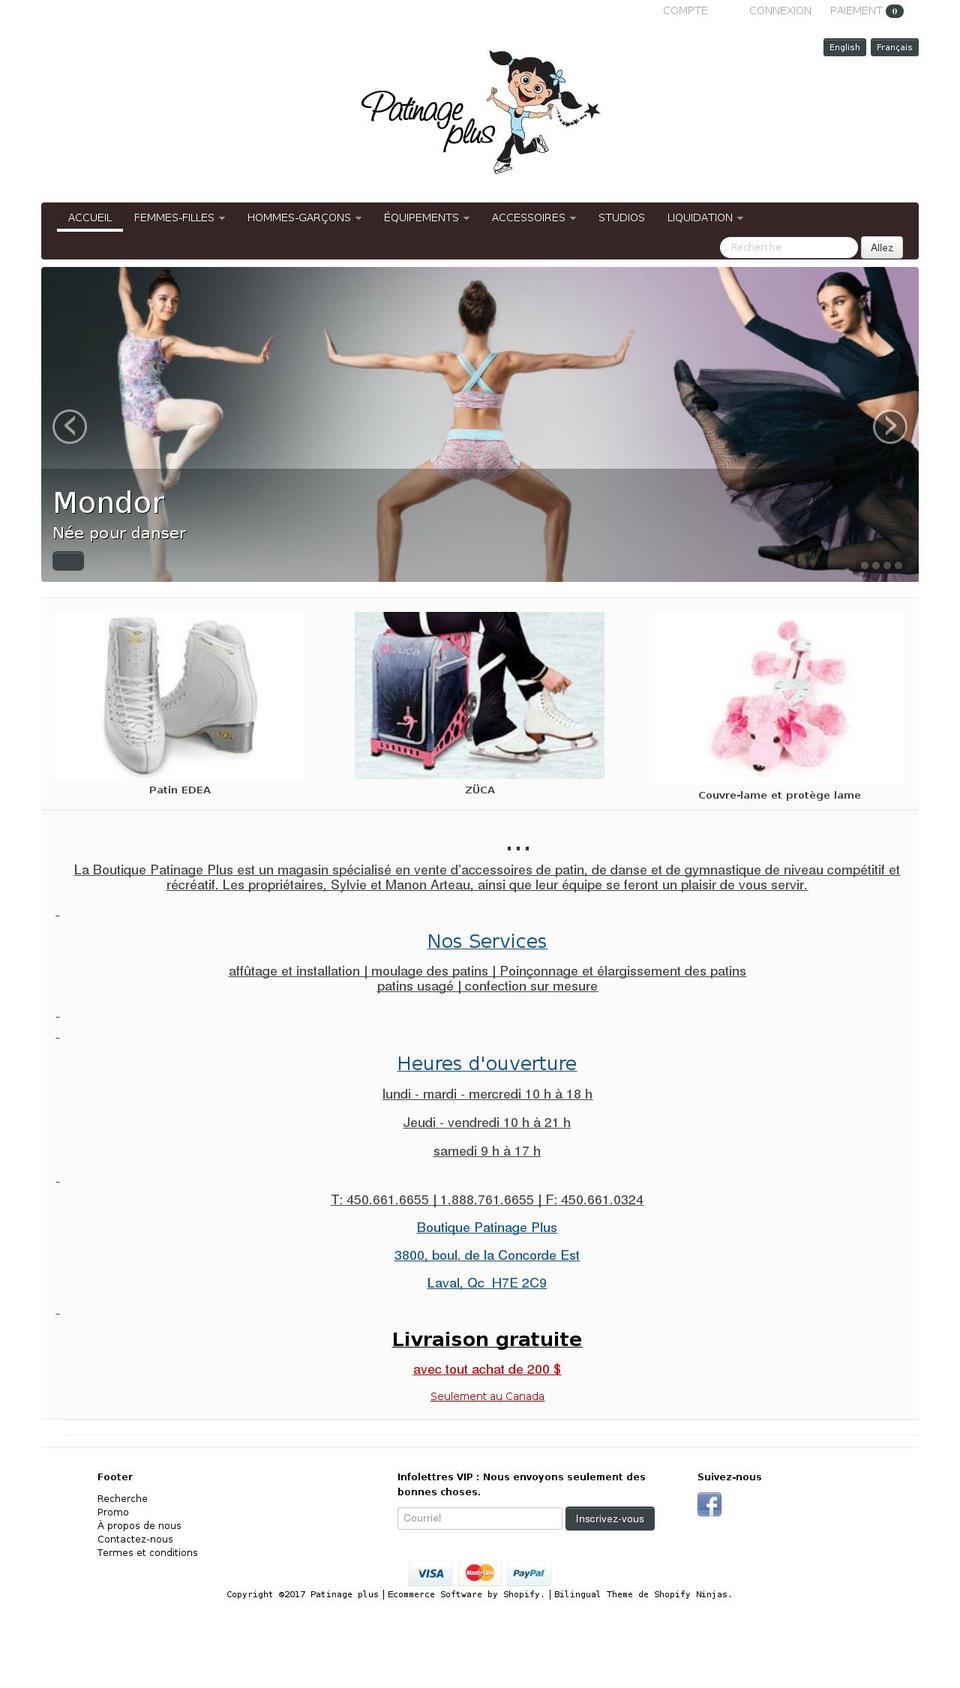 patinageplus.ca shopify website screenshot